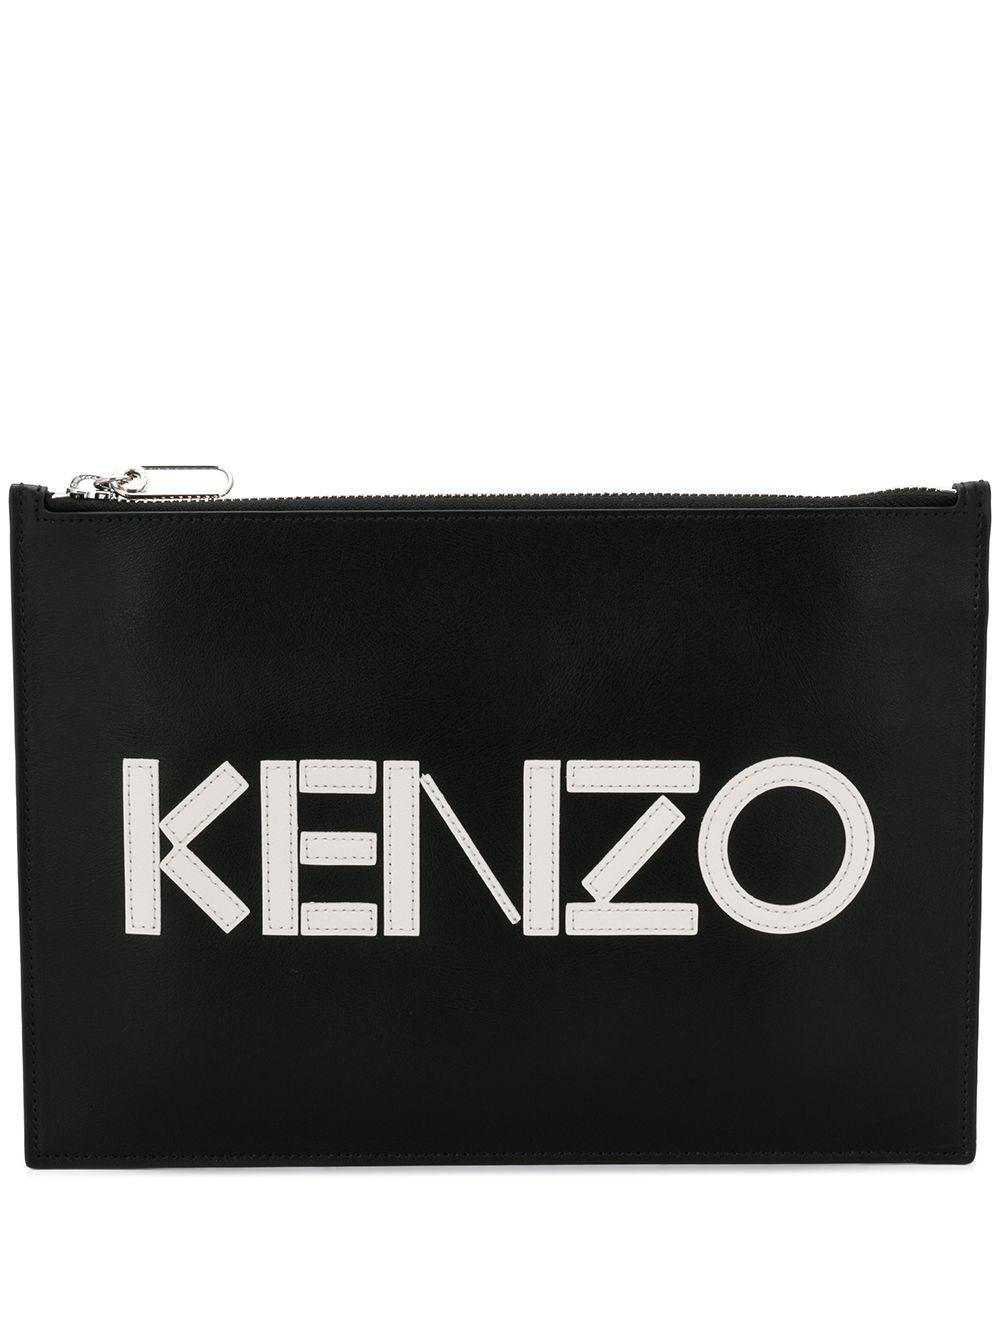 KENZO Leather Logo Clutch Bag in Black for Men - Lyst